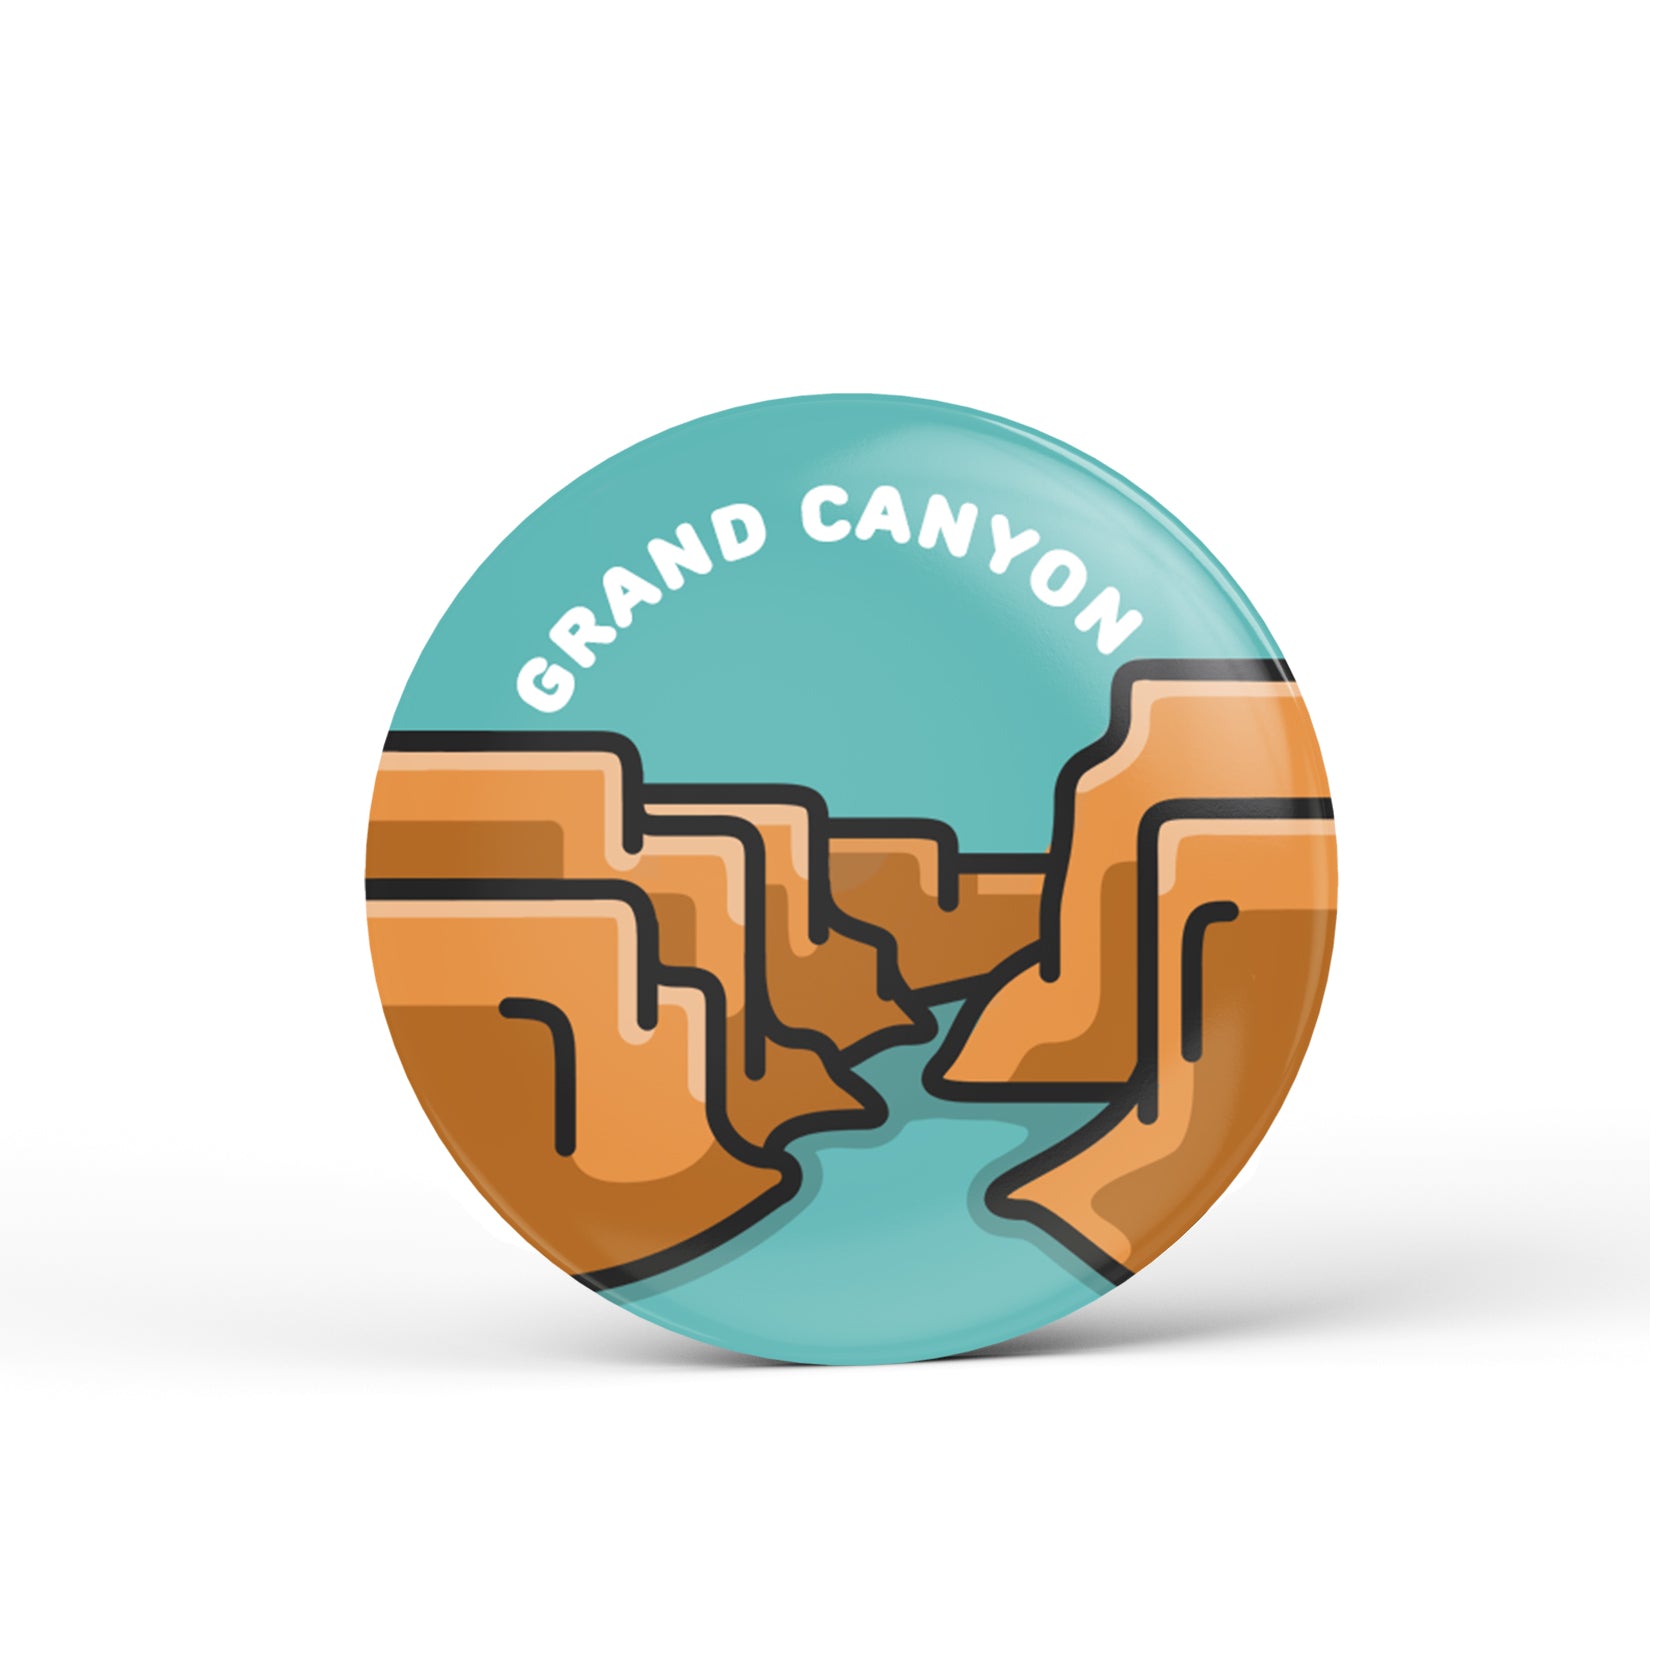 Grand Canyon National Park Button